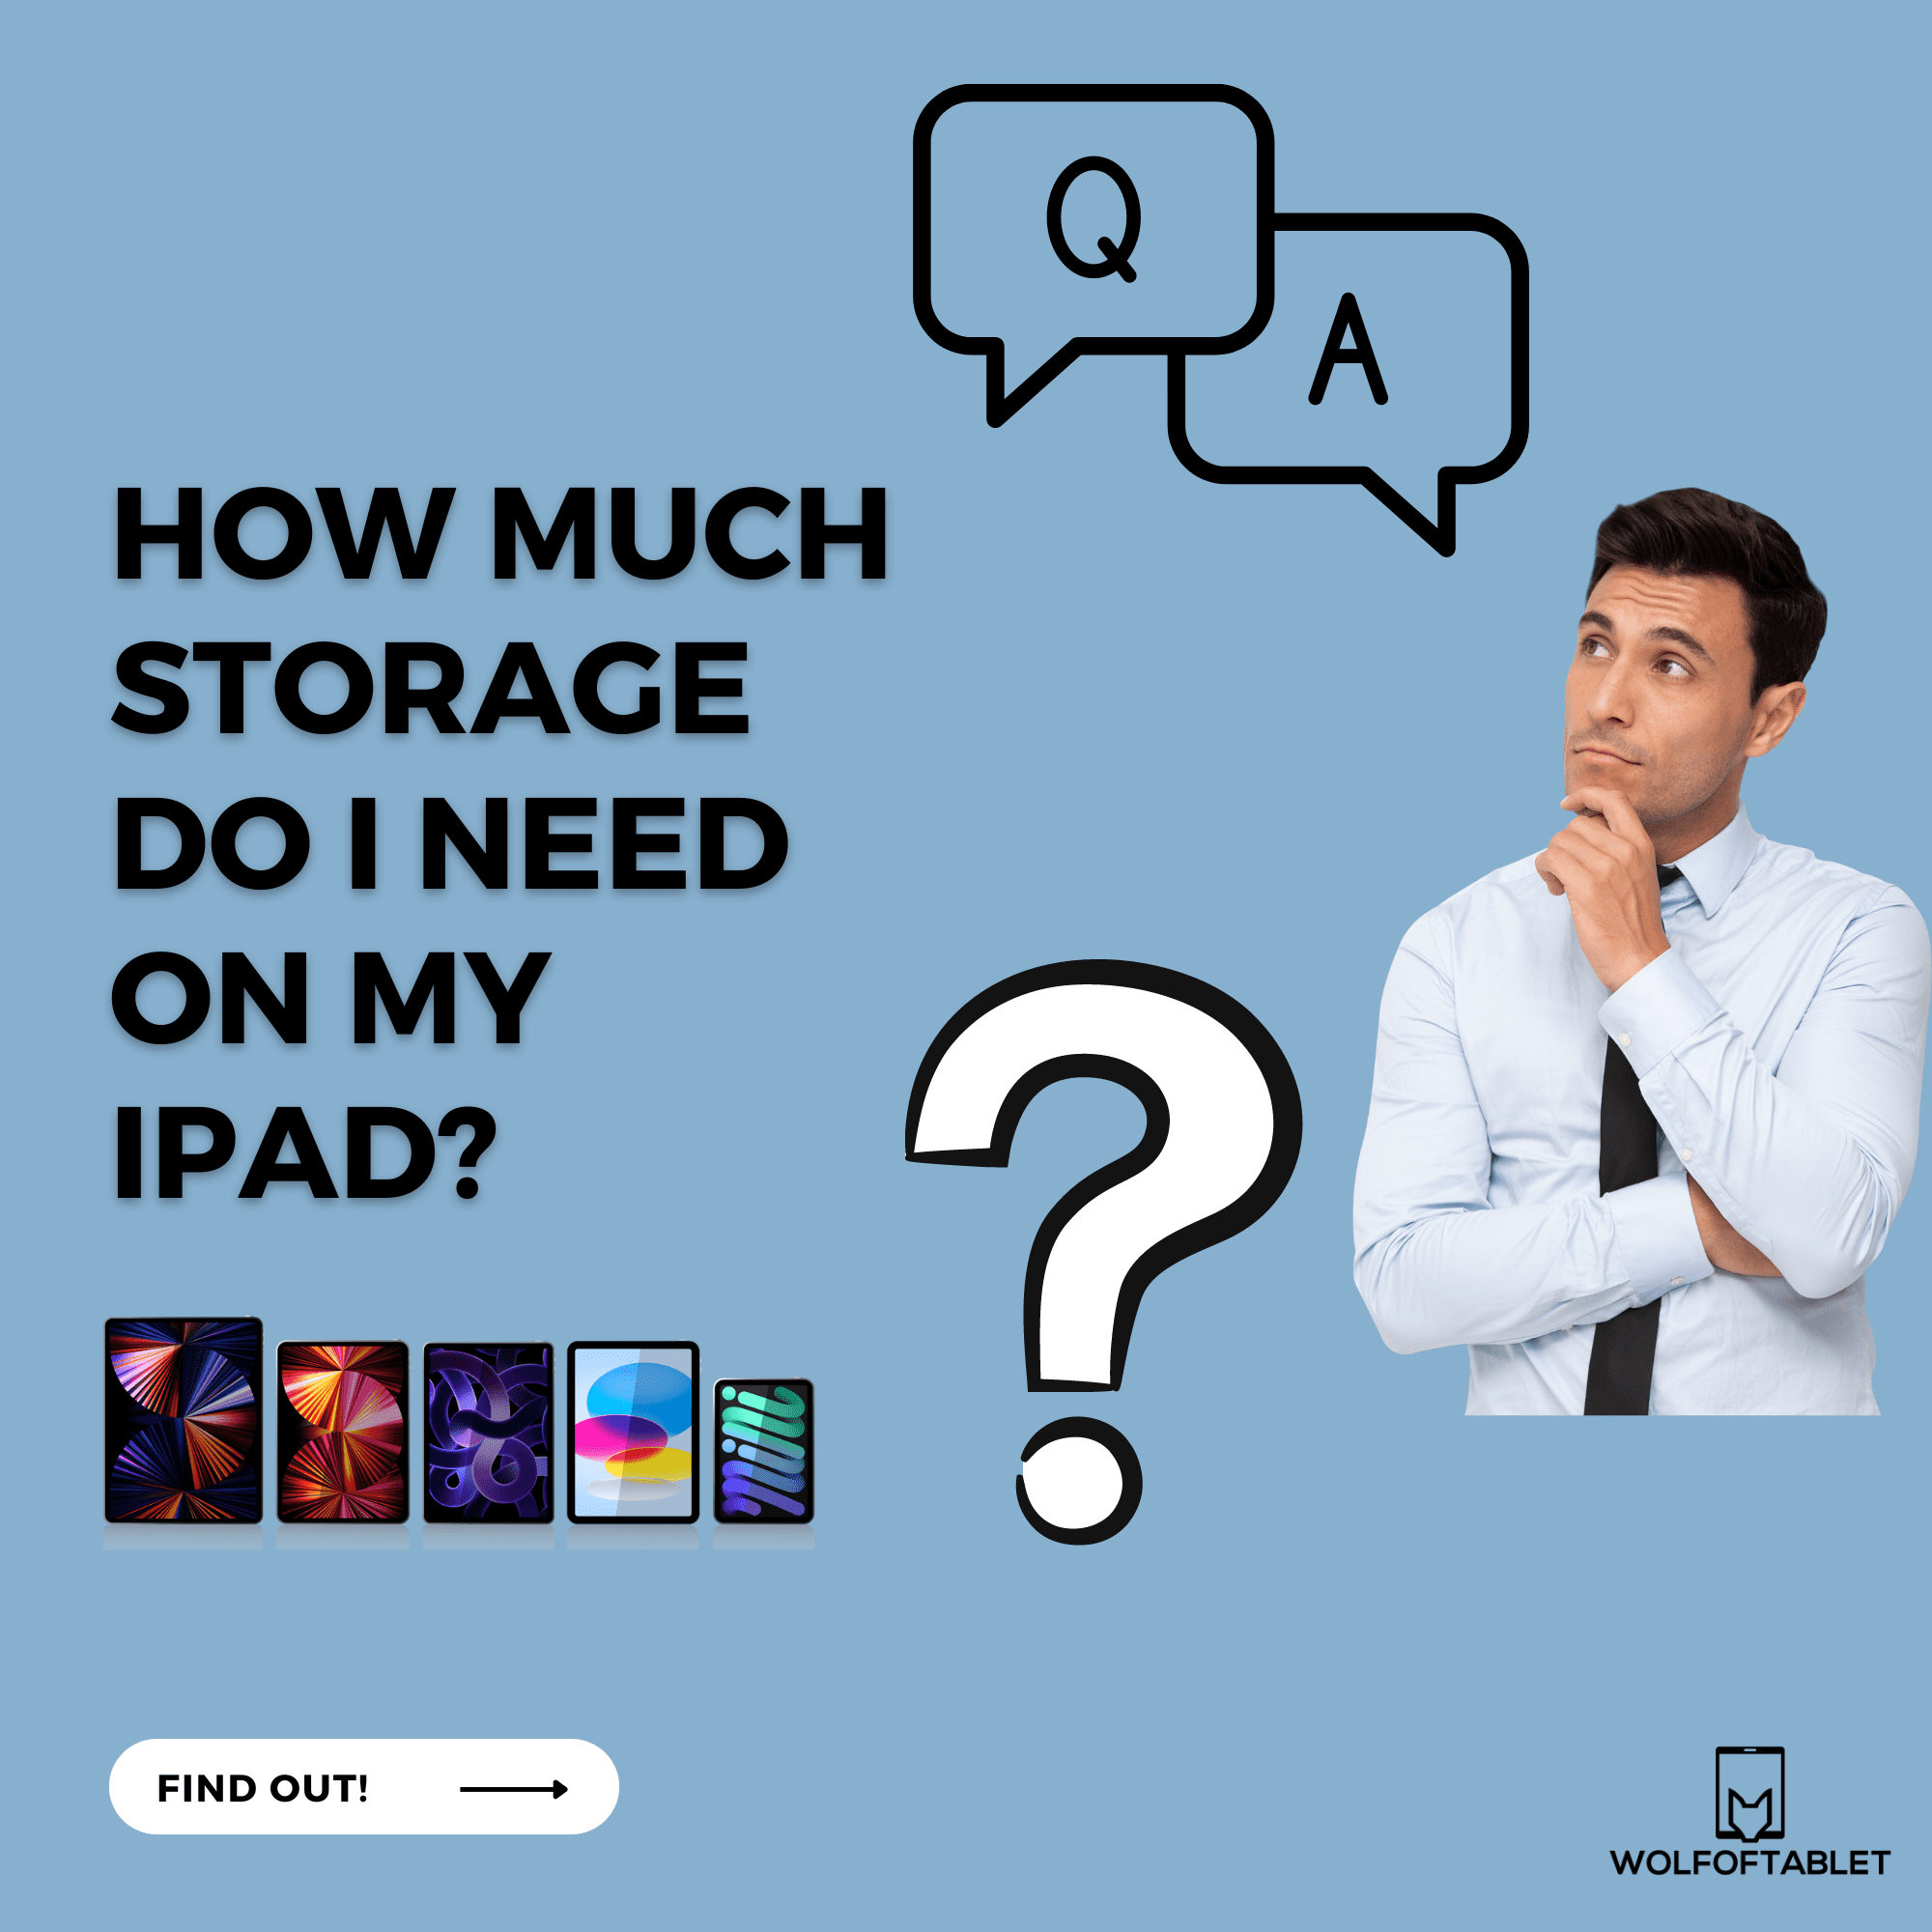 how much storage(gb) do i need on my ipad - answered